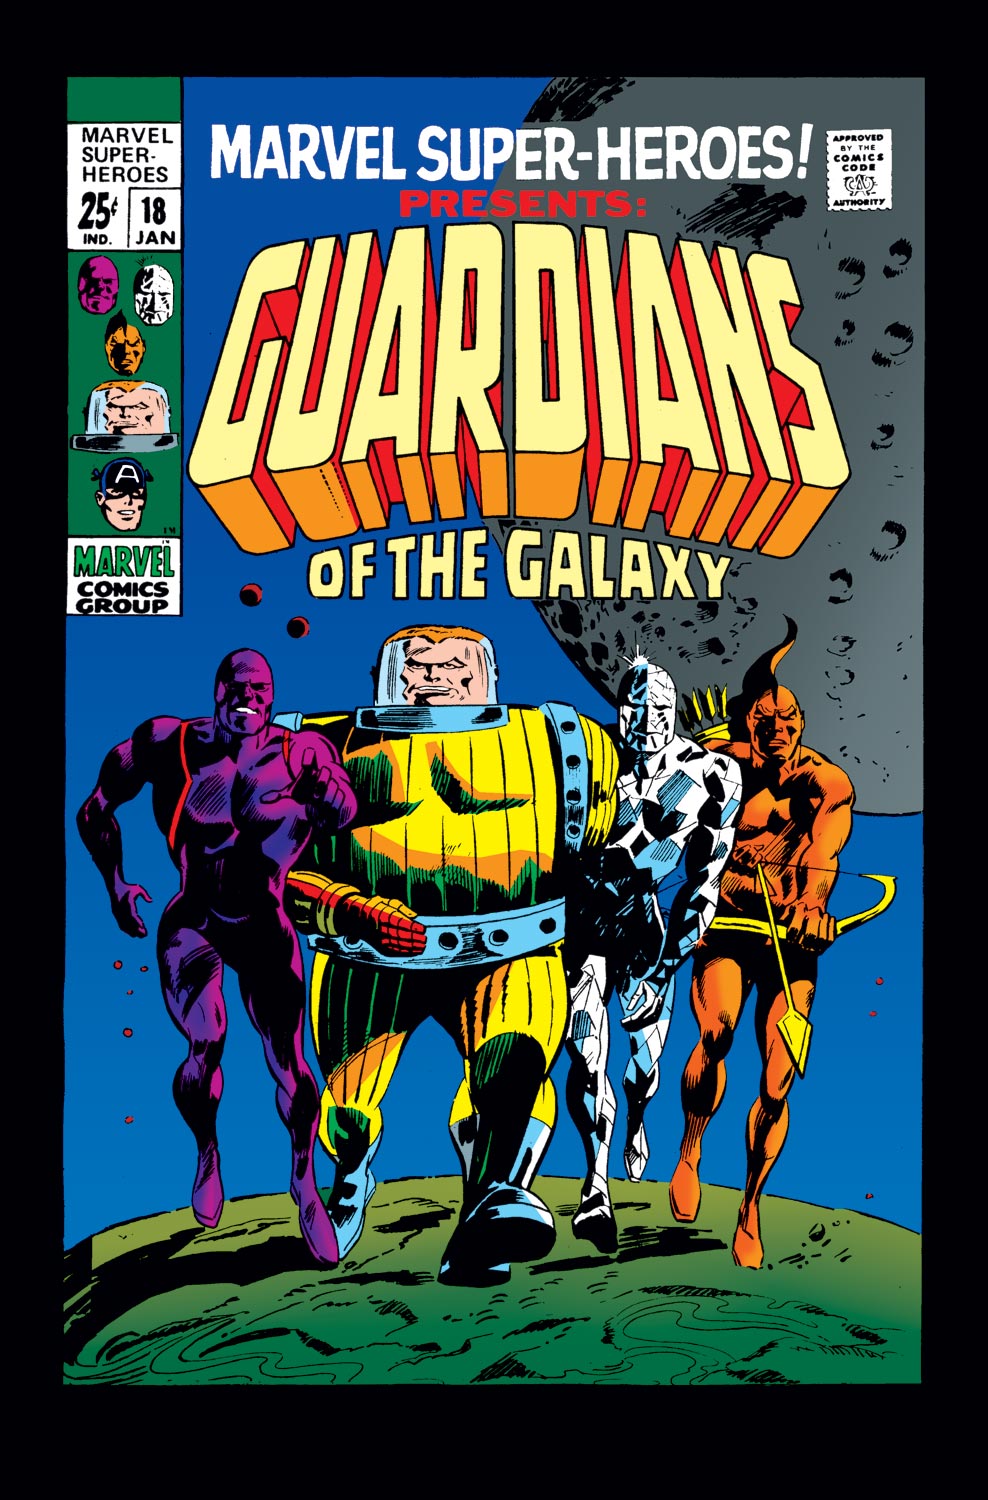 Marvel Super-Heroes (1967) #18